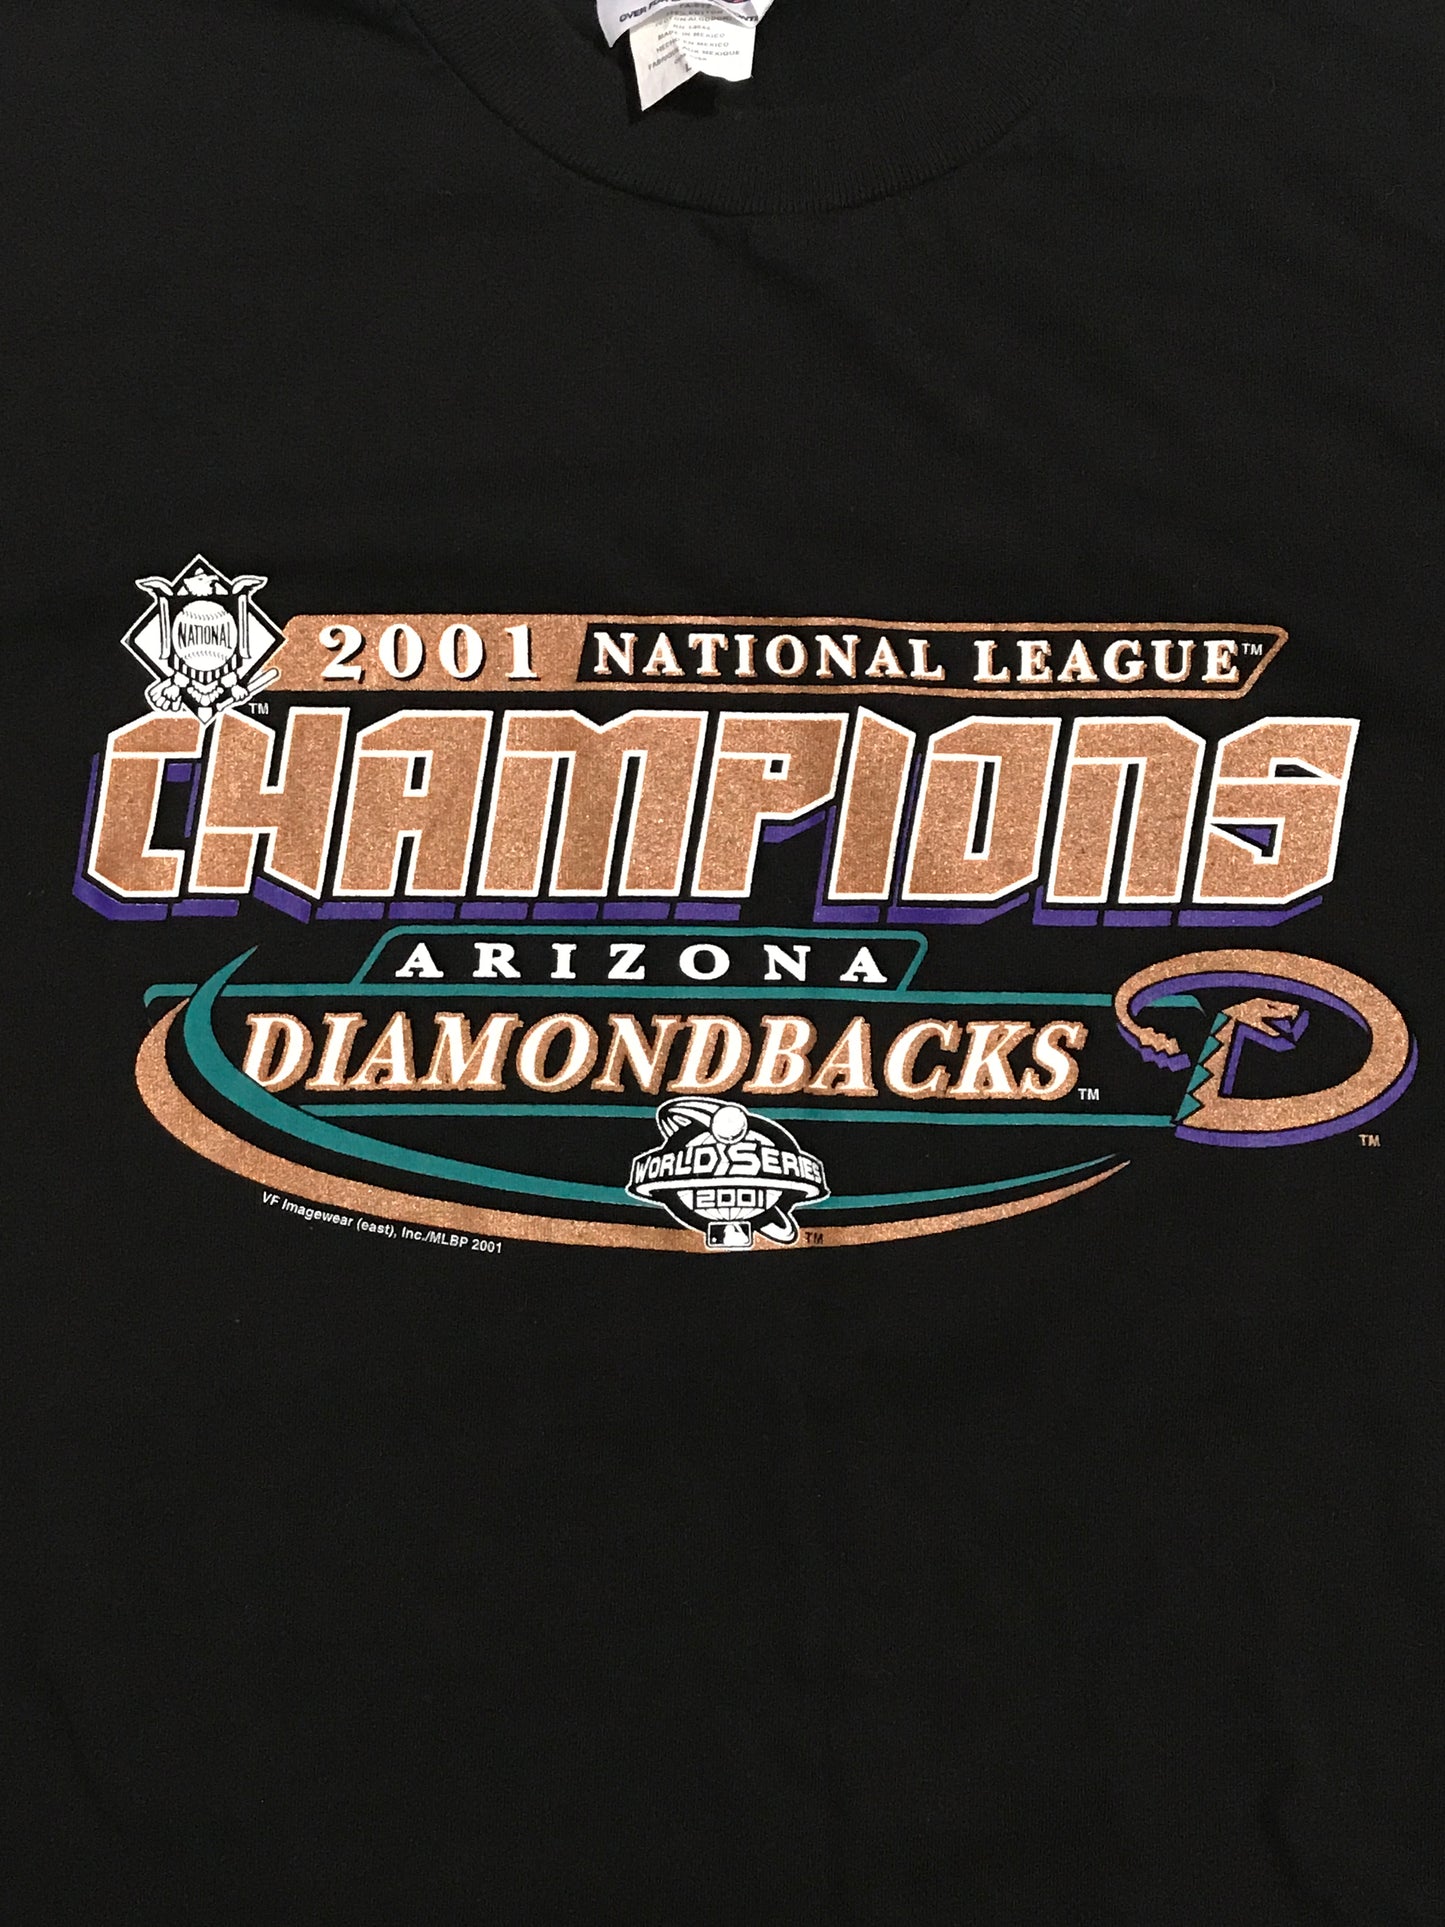 Vintage Arizona Diamondbacks 2001 NL Champs Shirt - L